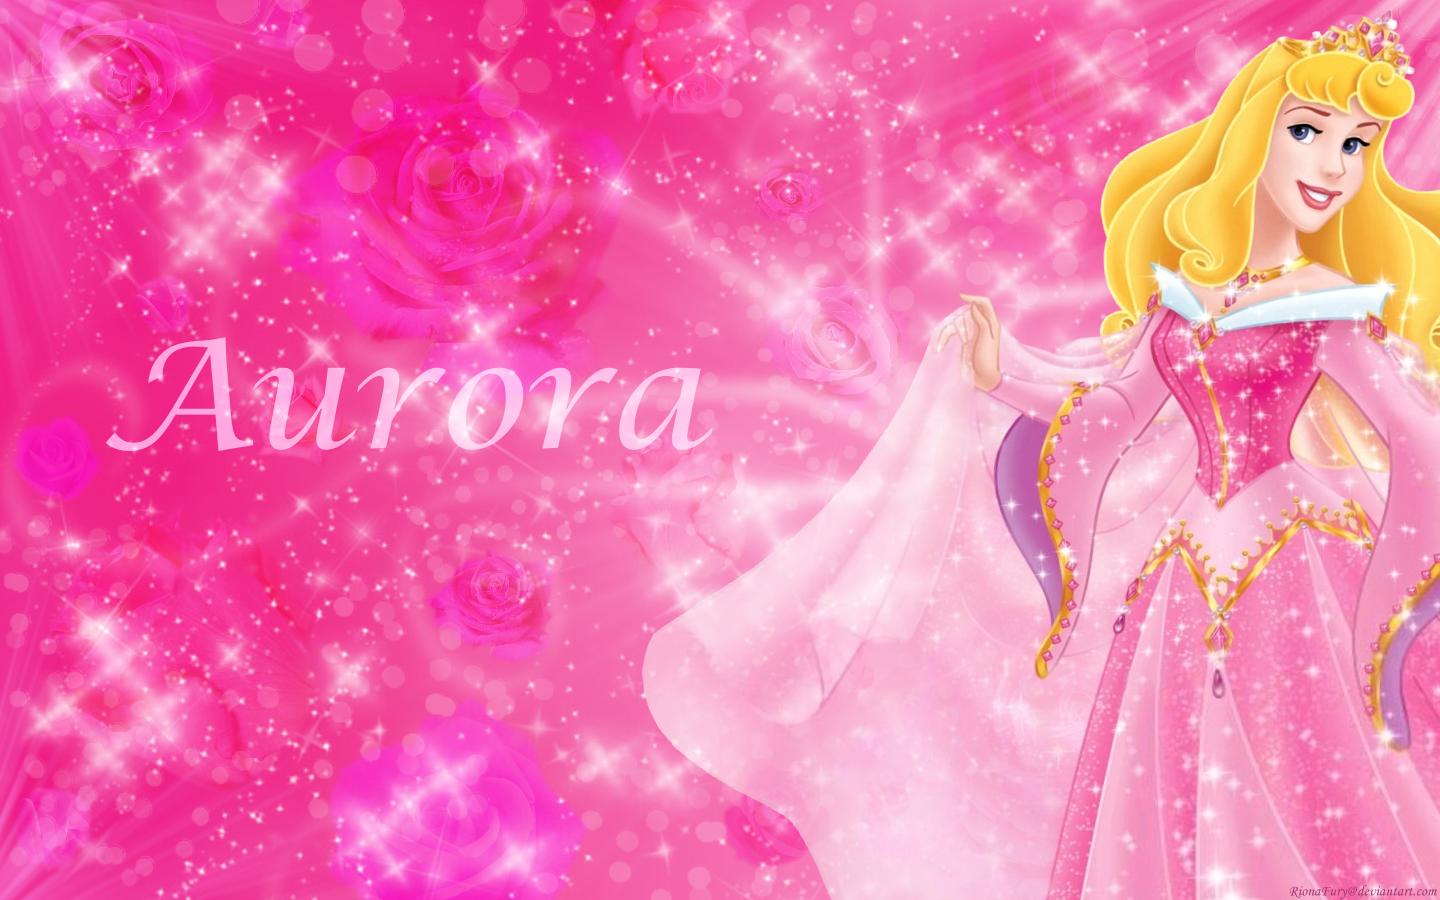 Disney Princess Sleeping Beauty Wallpaper 